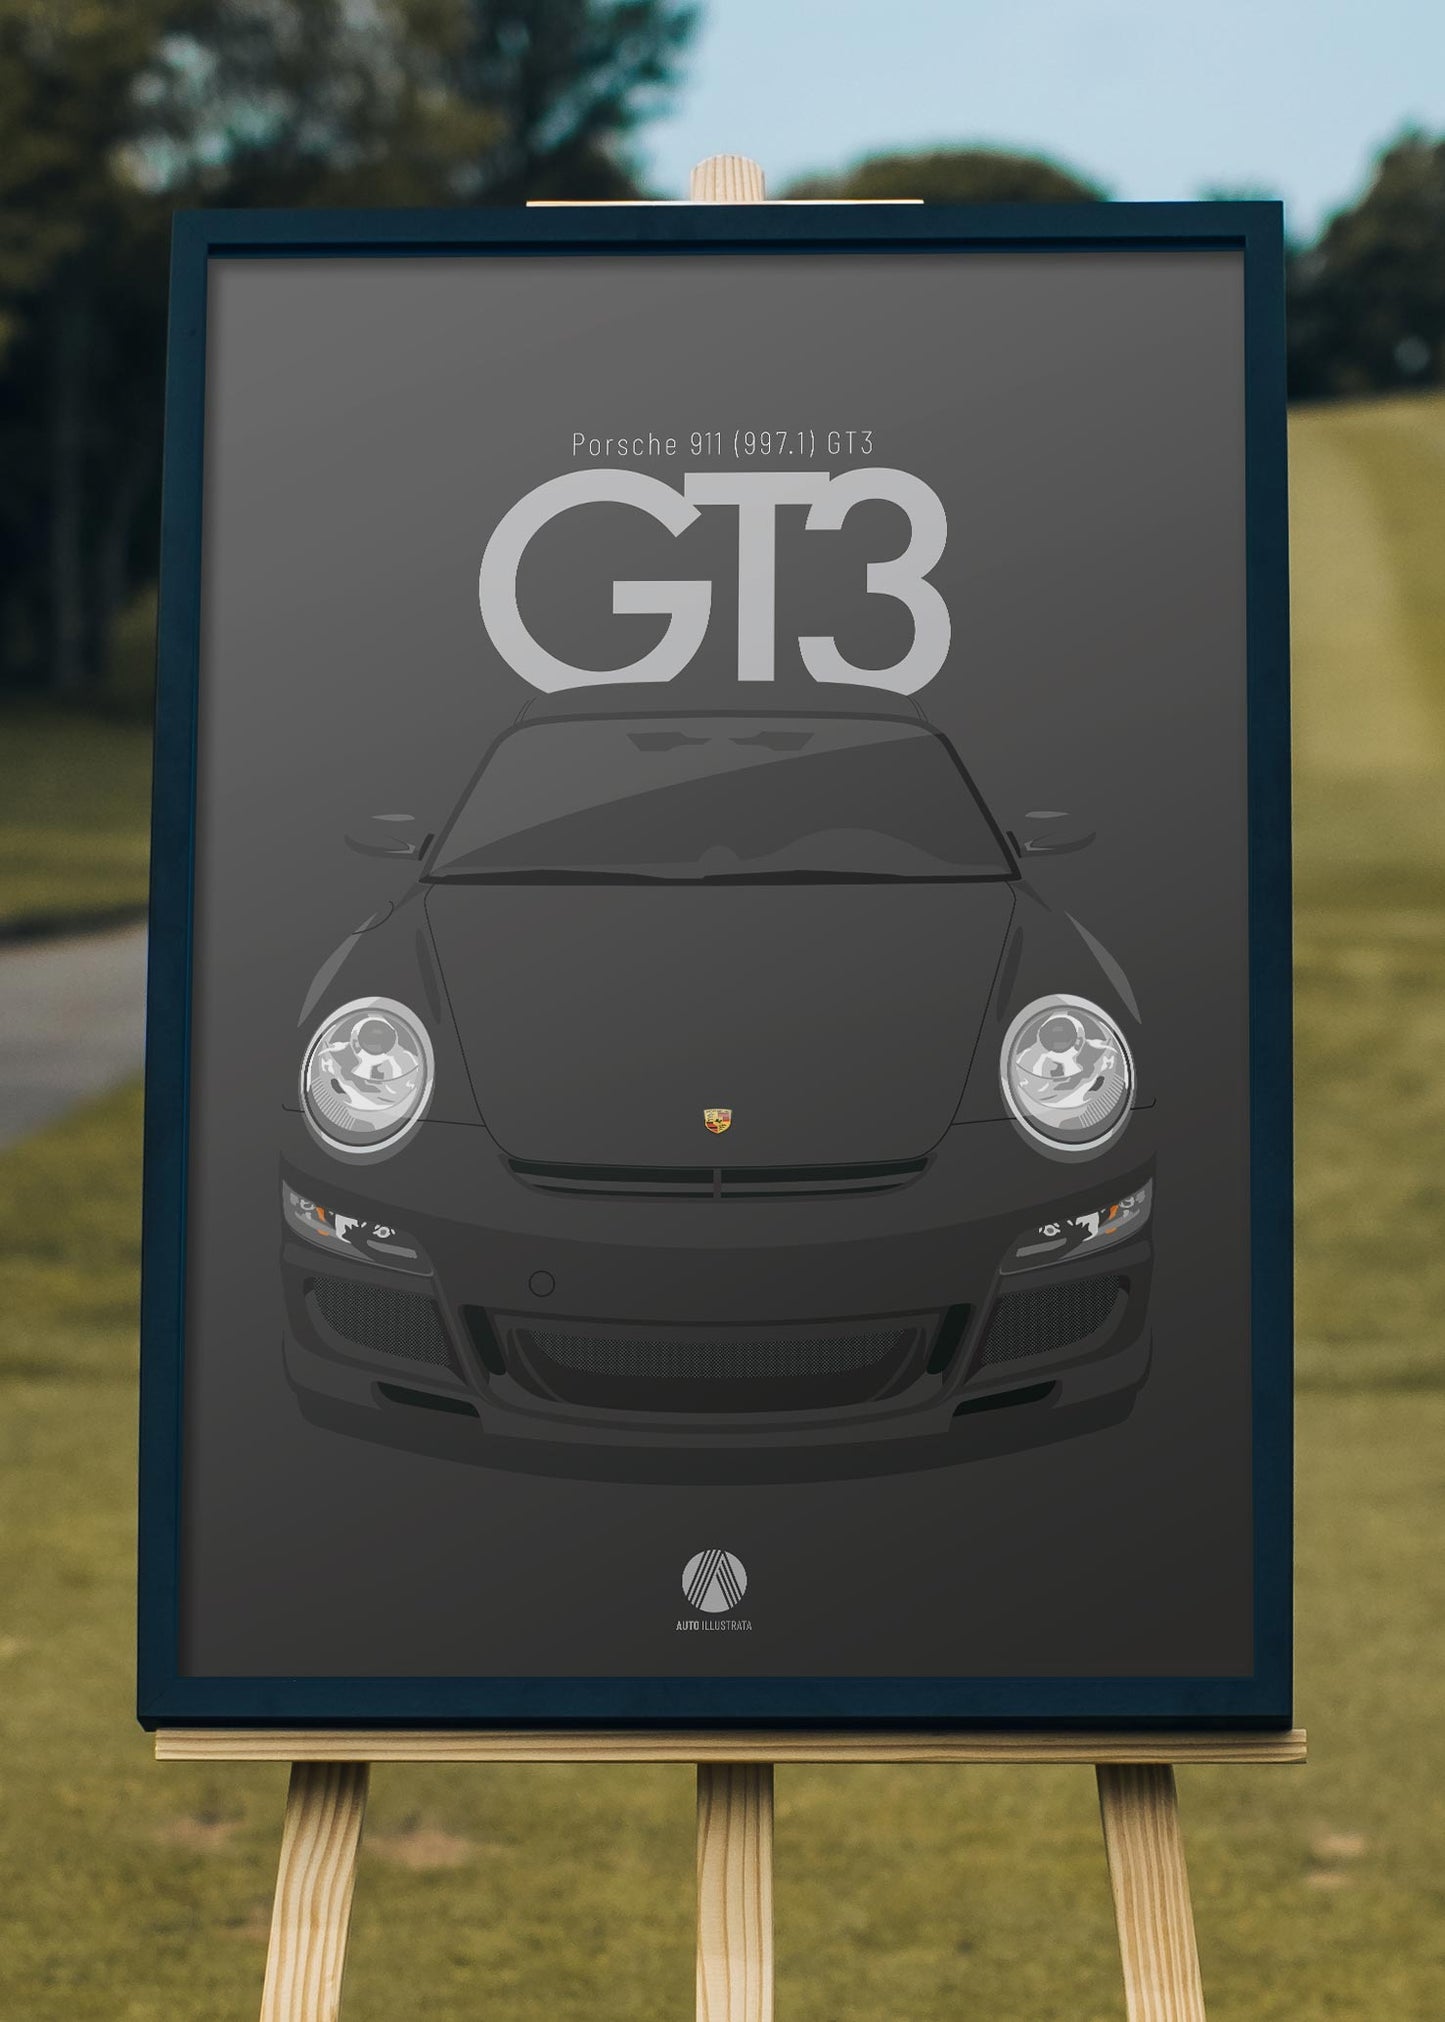 2006 Porsche 911 (997.1) GT3 Black - poster print